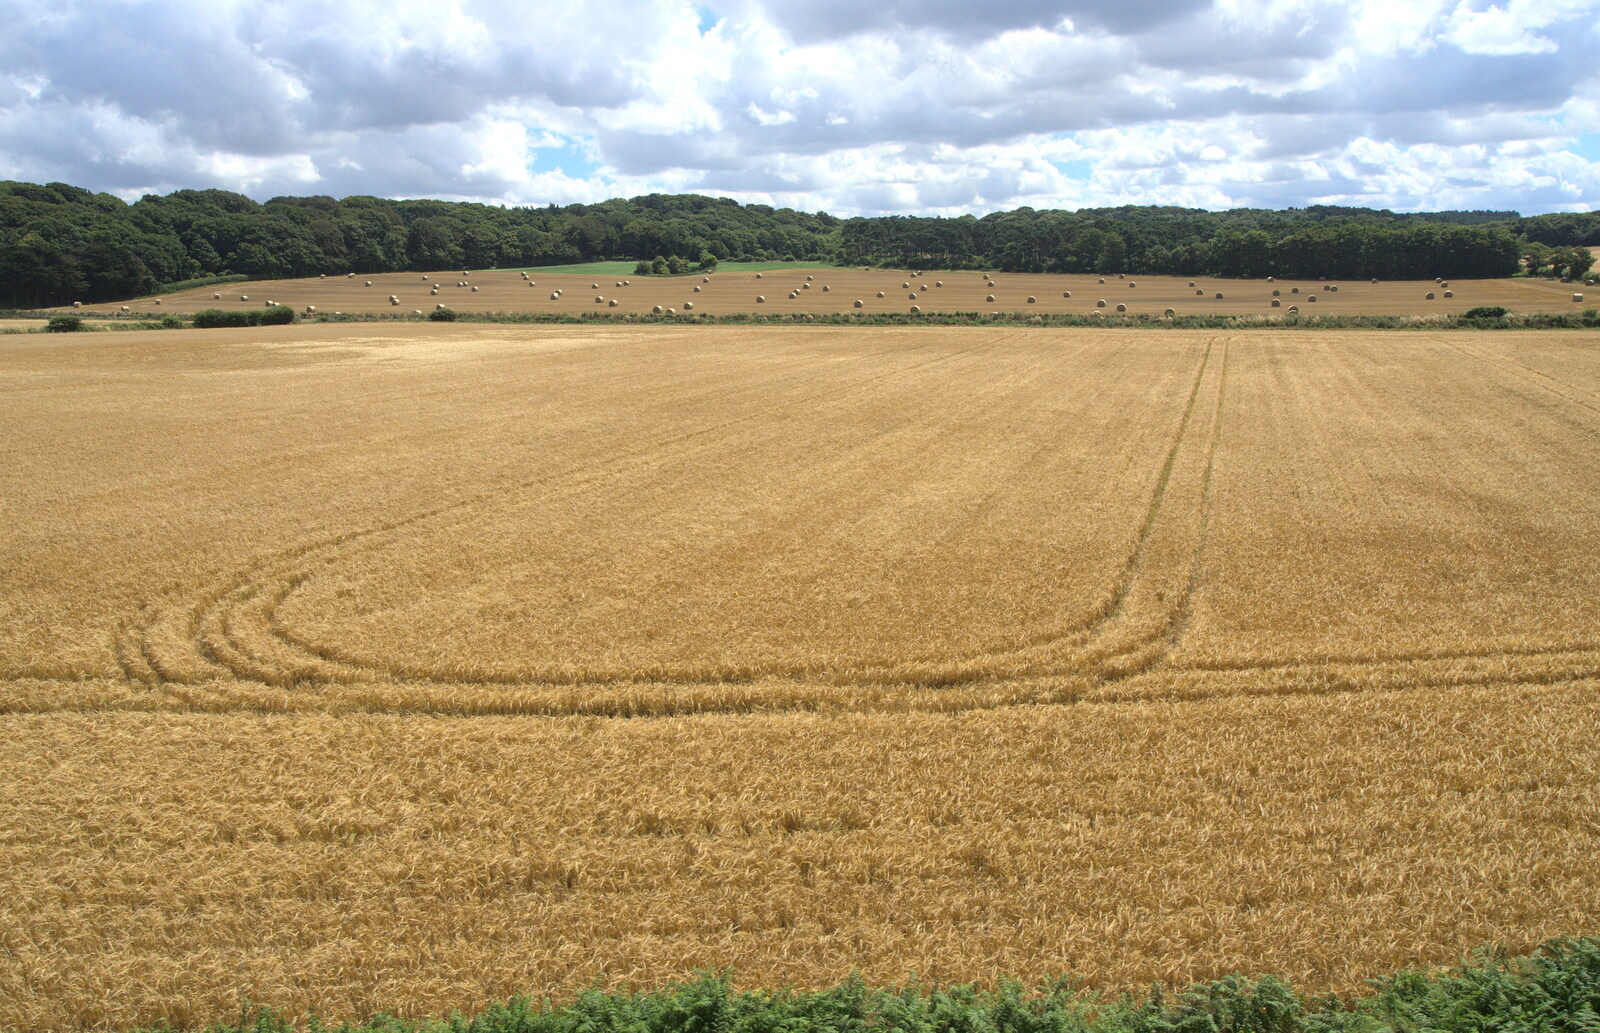 The golden wheat fields of Norfolk from Sheringham Steam, Sheringham, North Norfolk - 31st July 2016